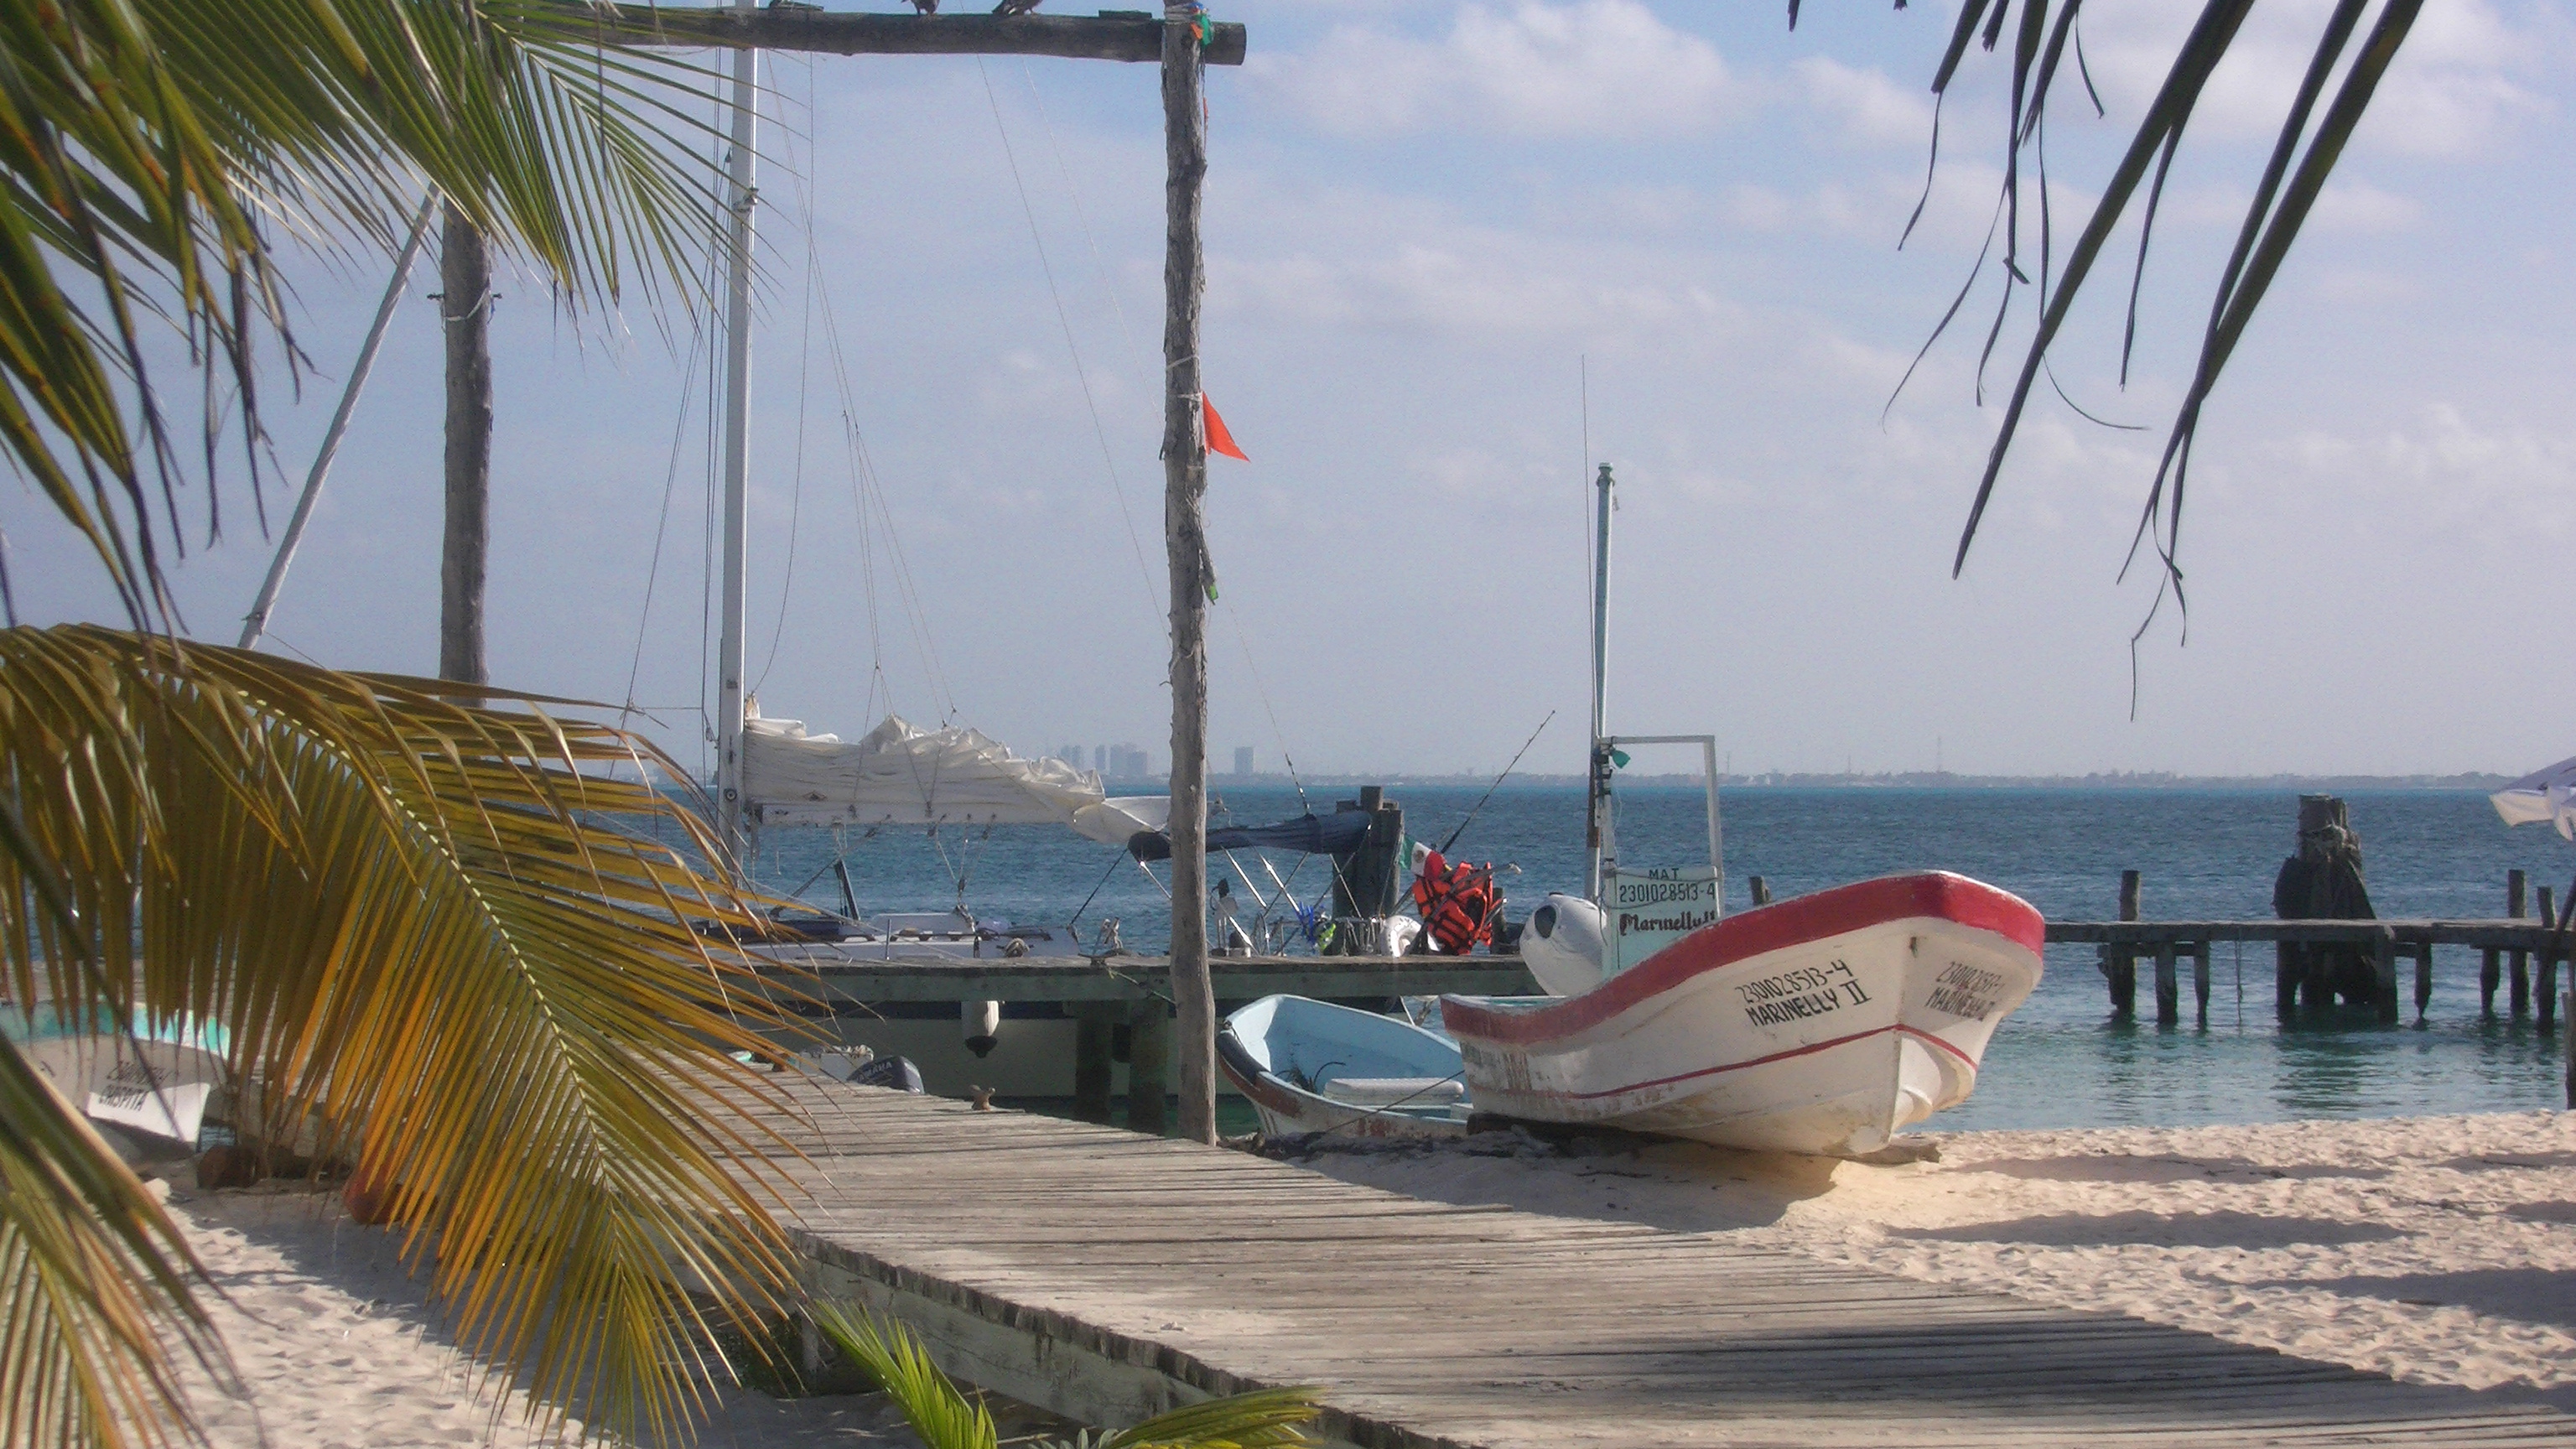 Isla Mujeres (Boats Docked) by swiggz